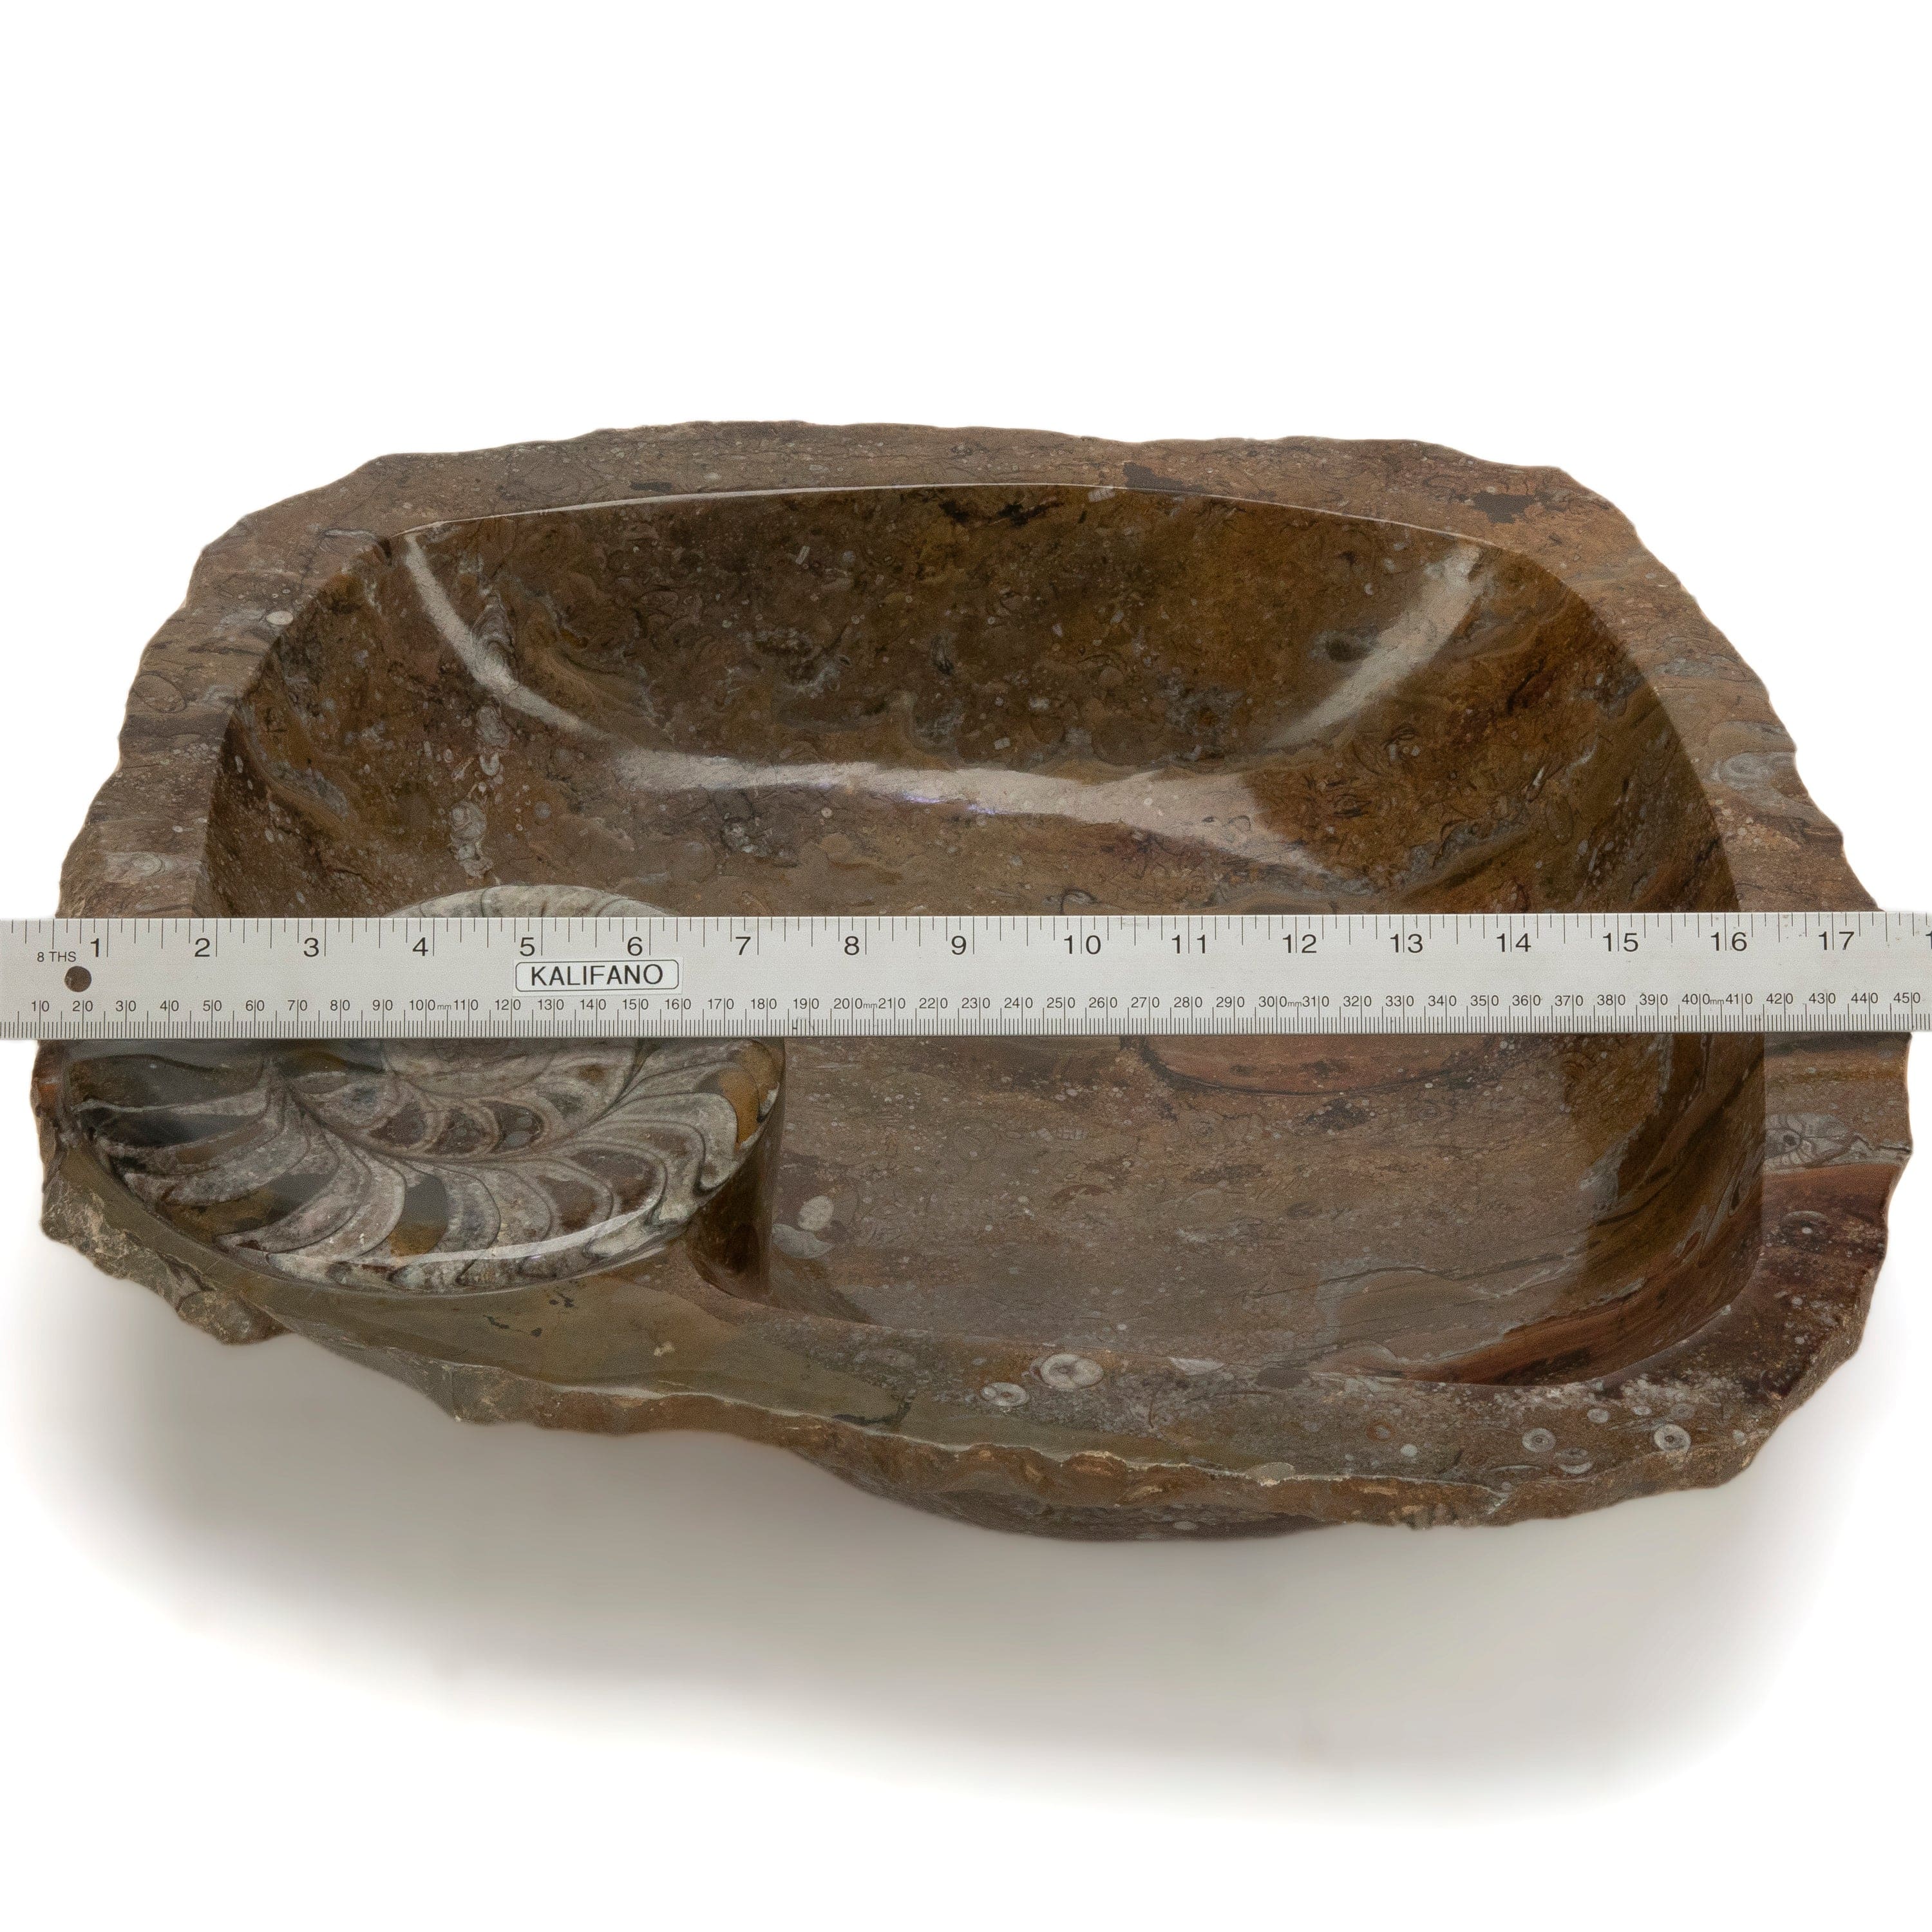 KALIFANO Ammonites Ammonite Fossil Sink Bowl from Morocco - 18" AMBOWL3200.010